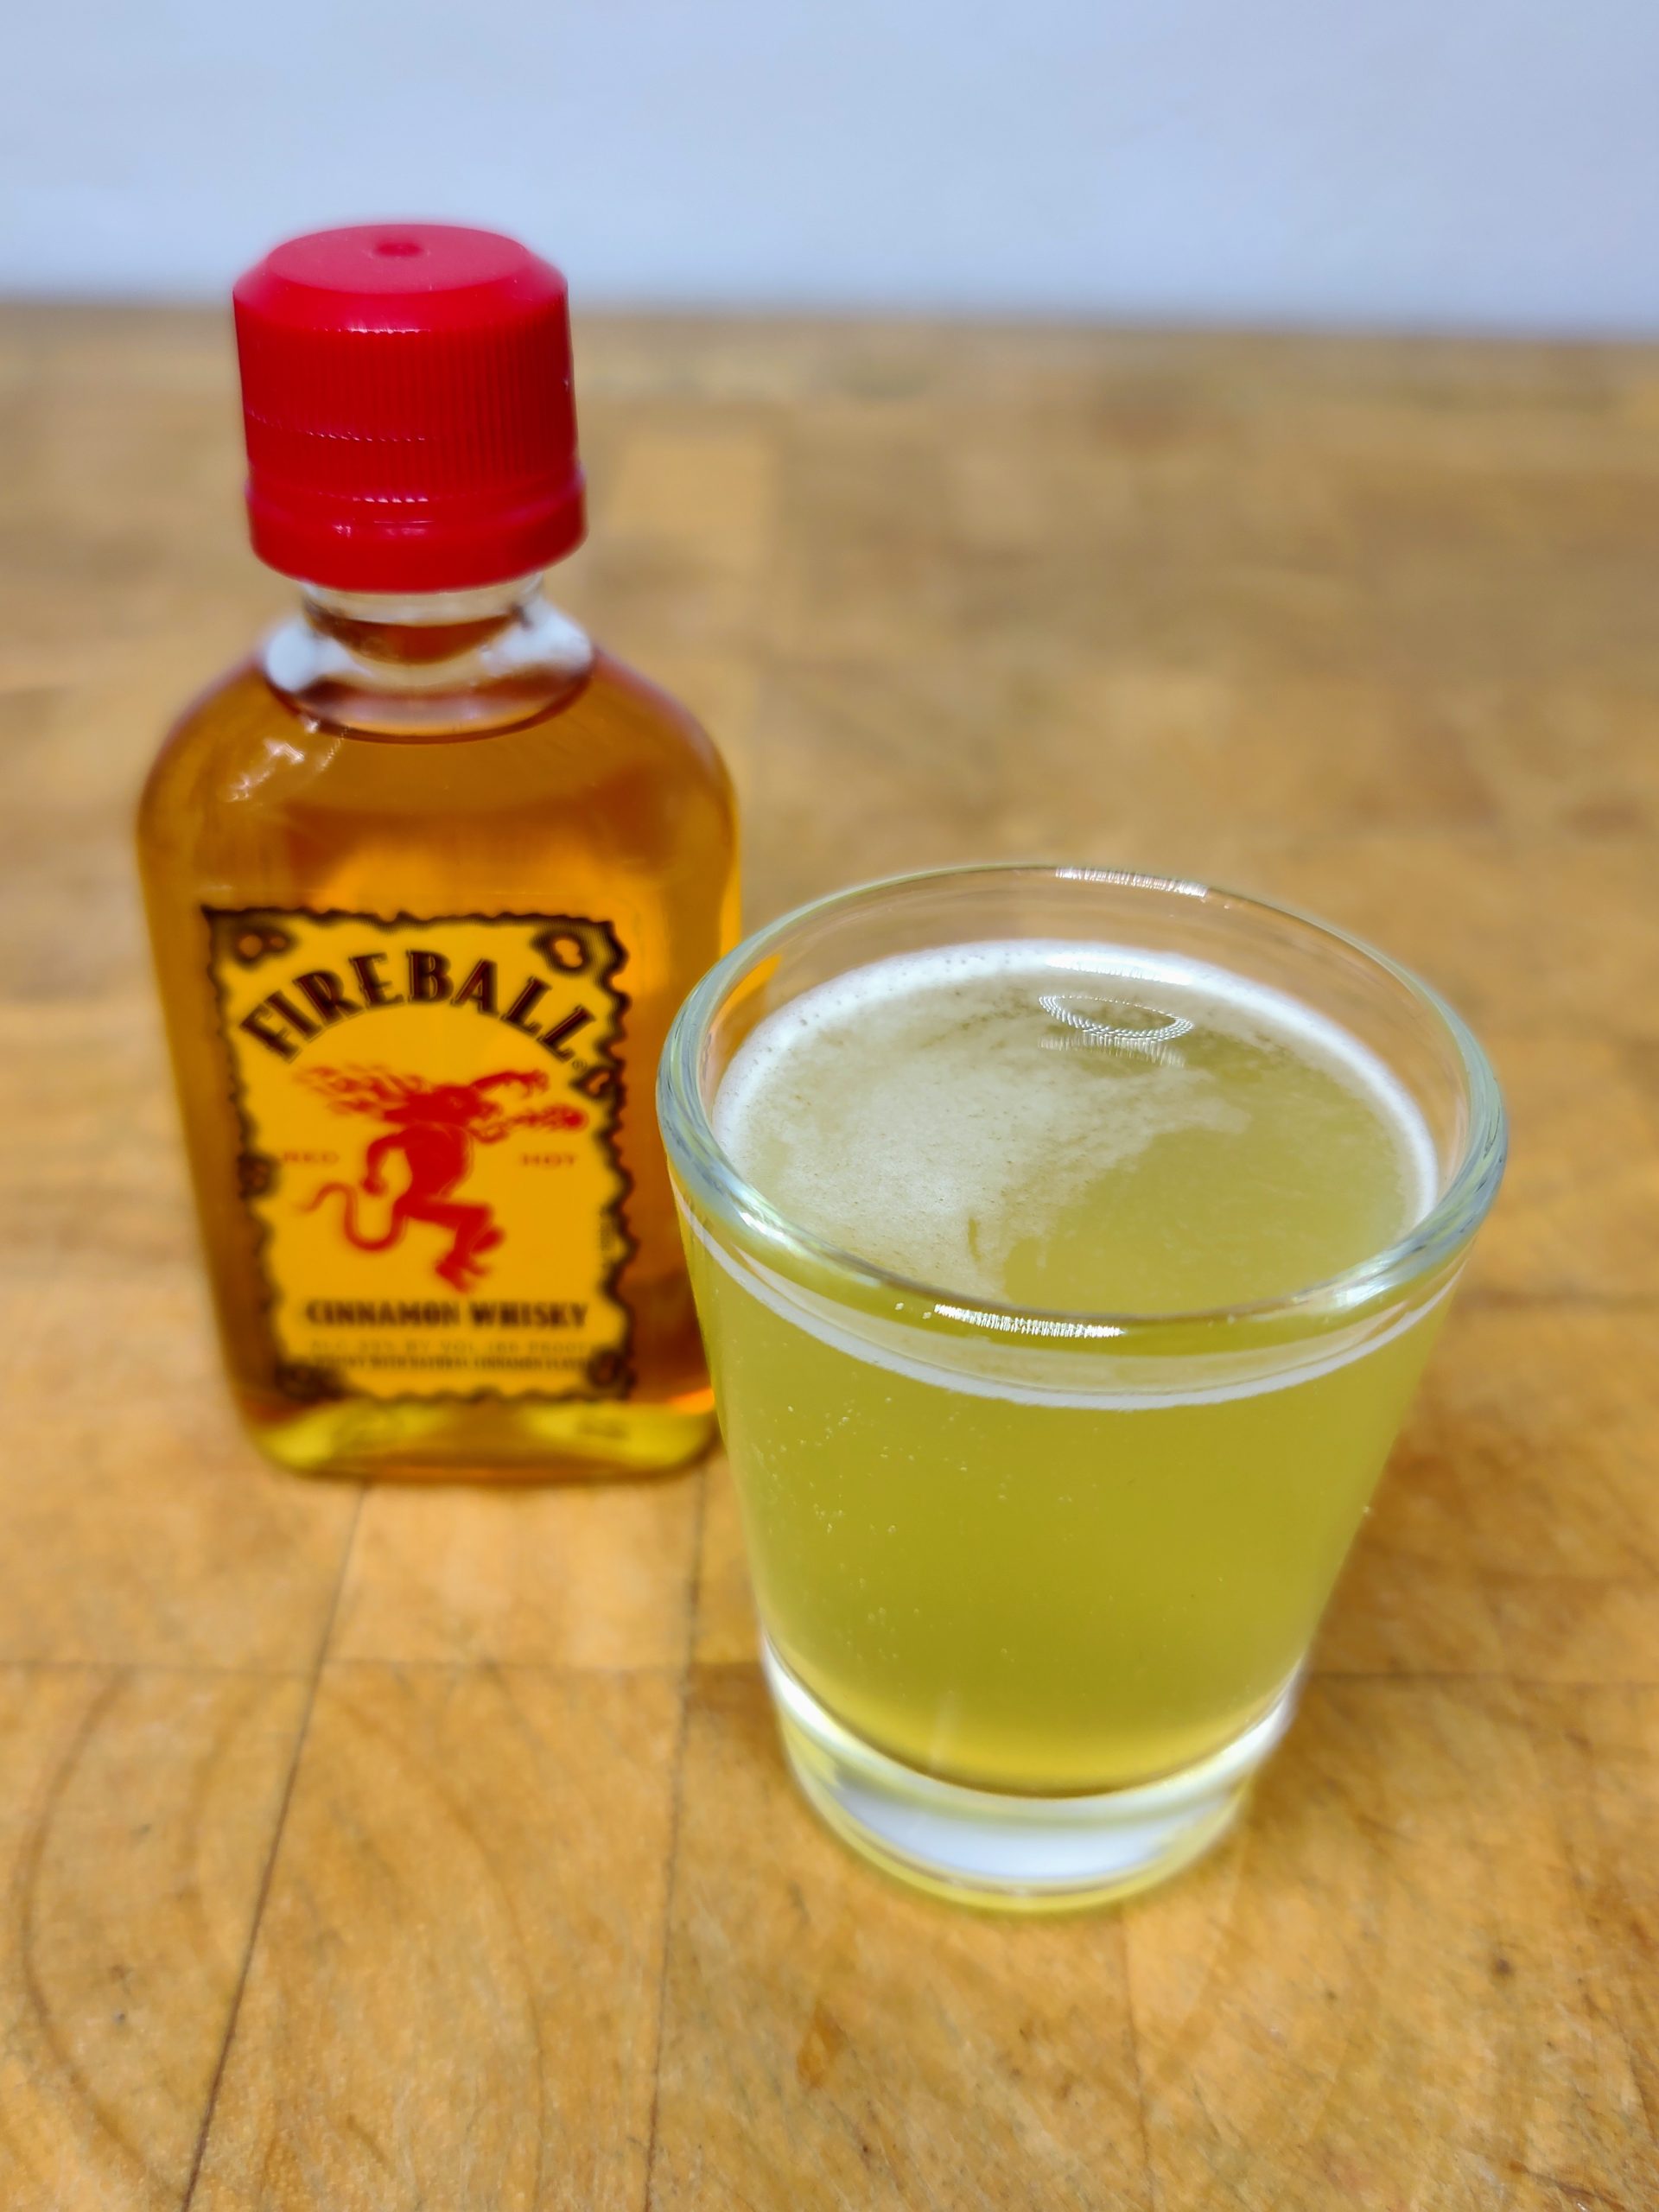 applesauce shot with bottle of fireball